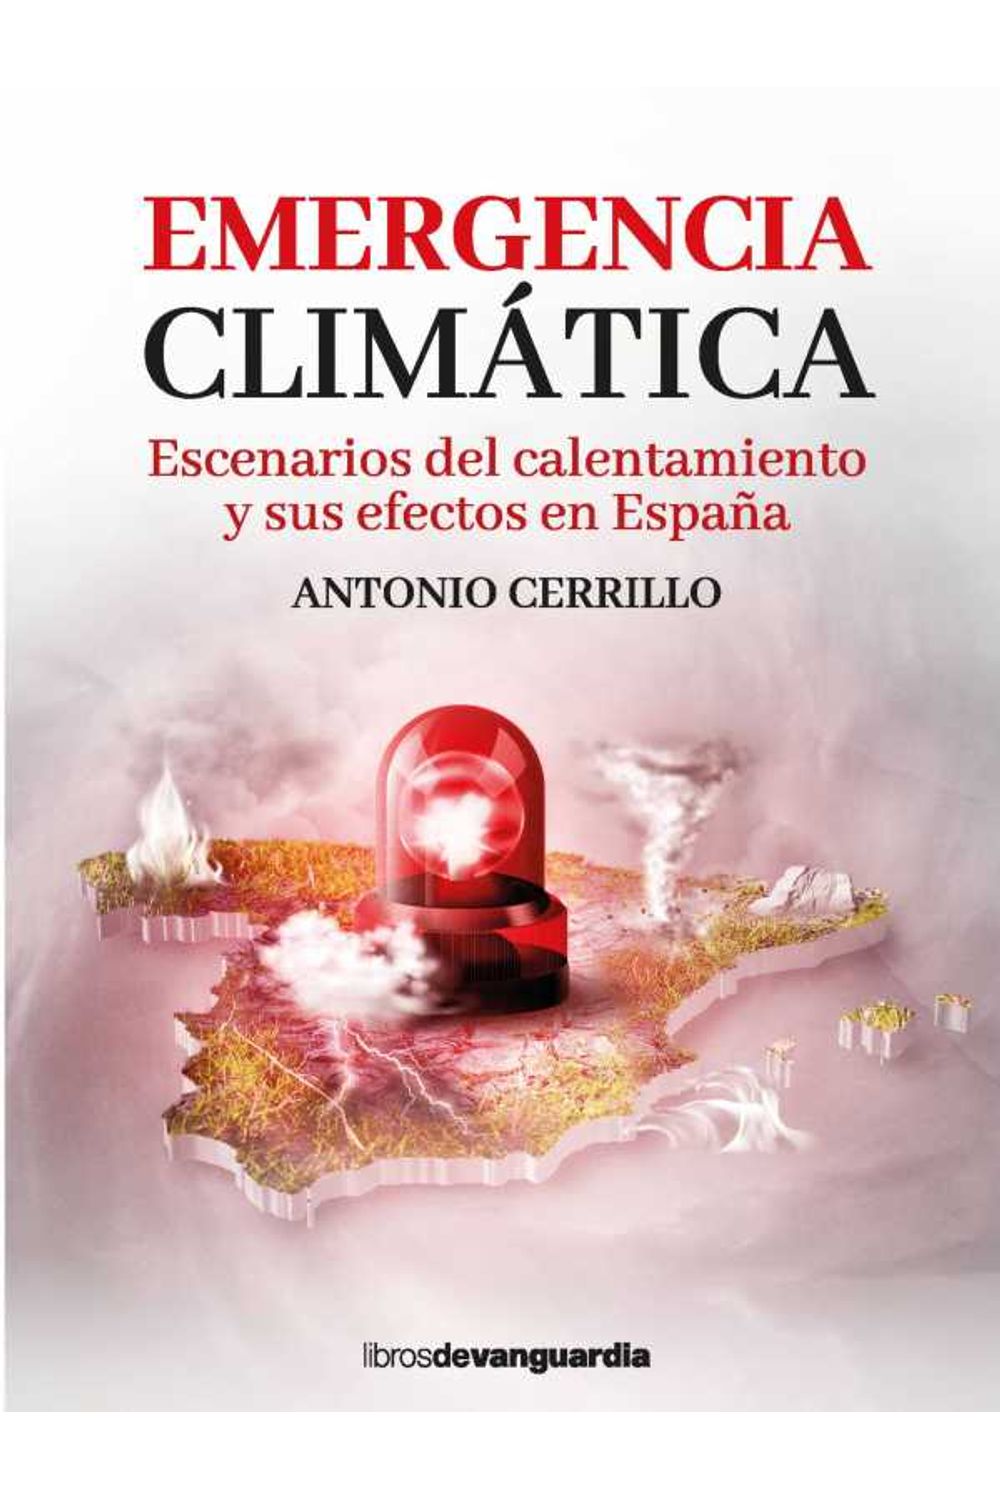 bw-emergencia-climaacutetica-libros-de-vanguardia-9788416372713